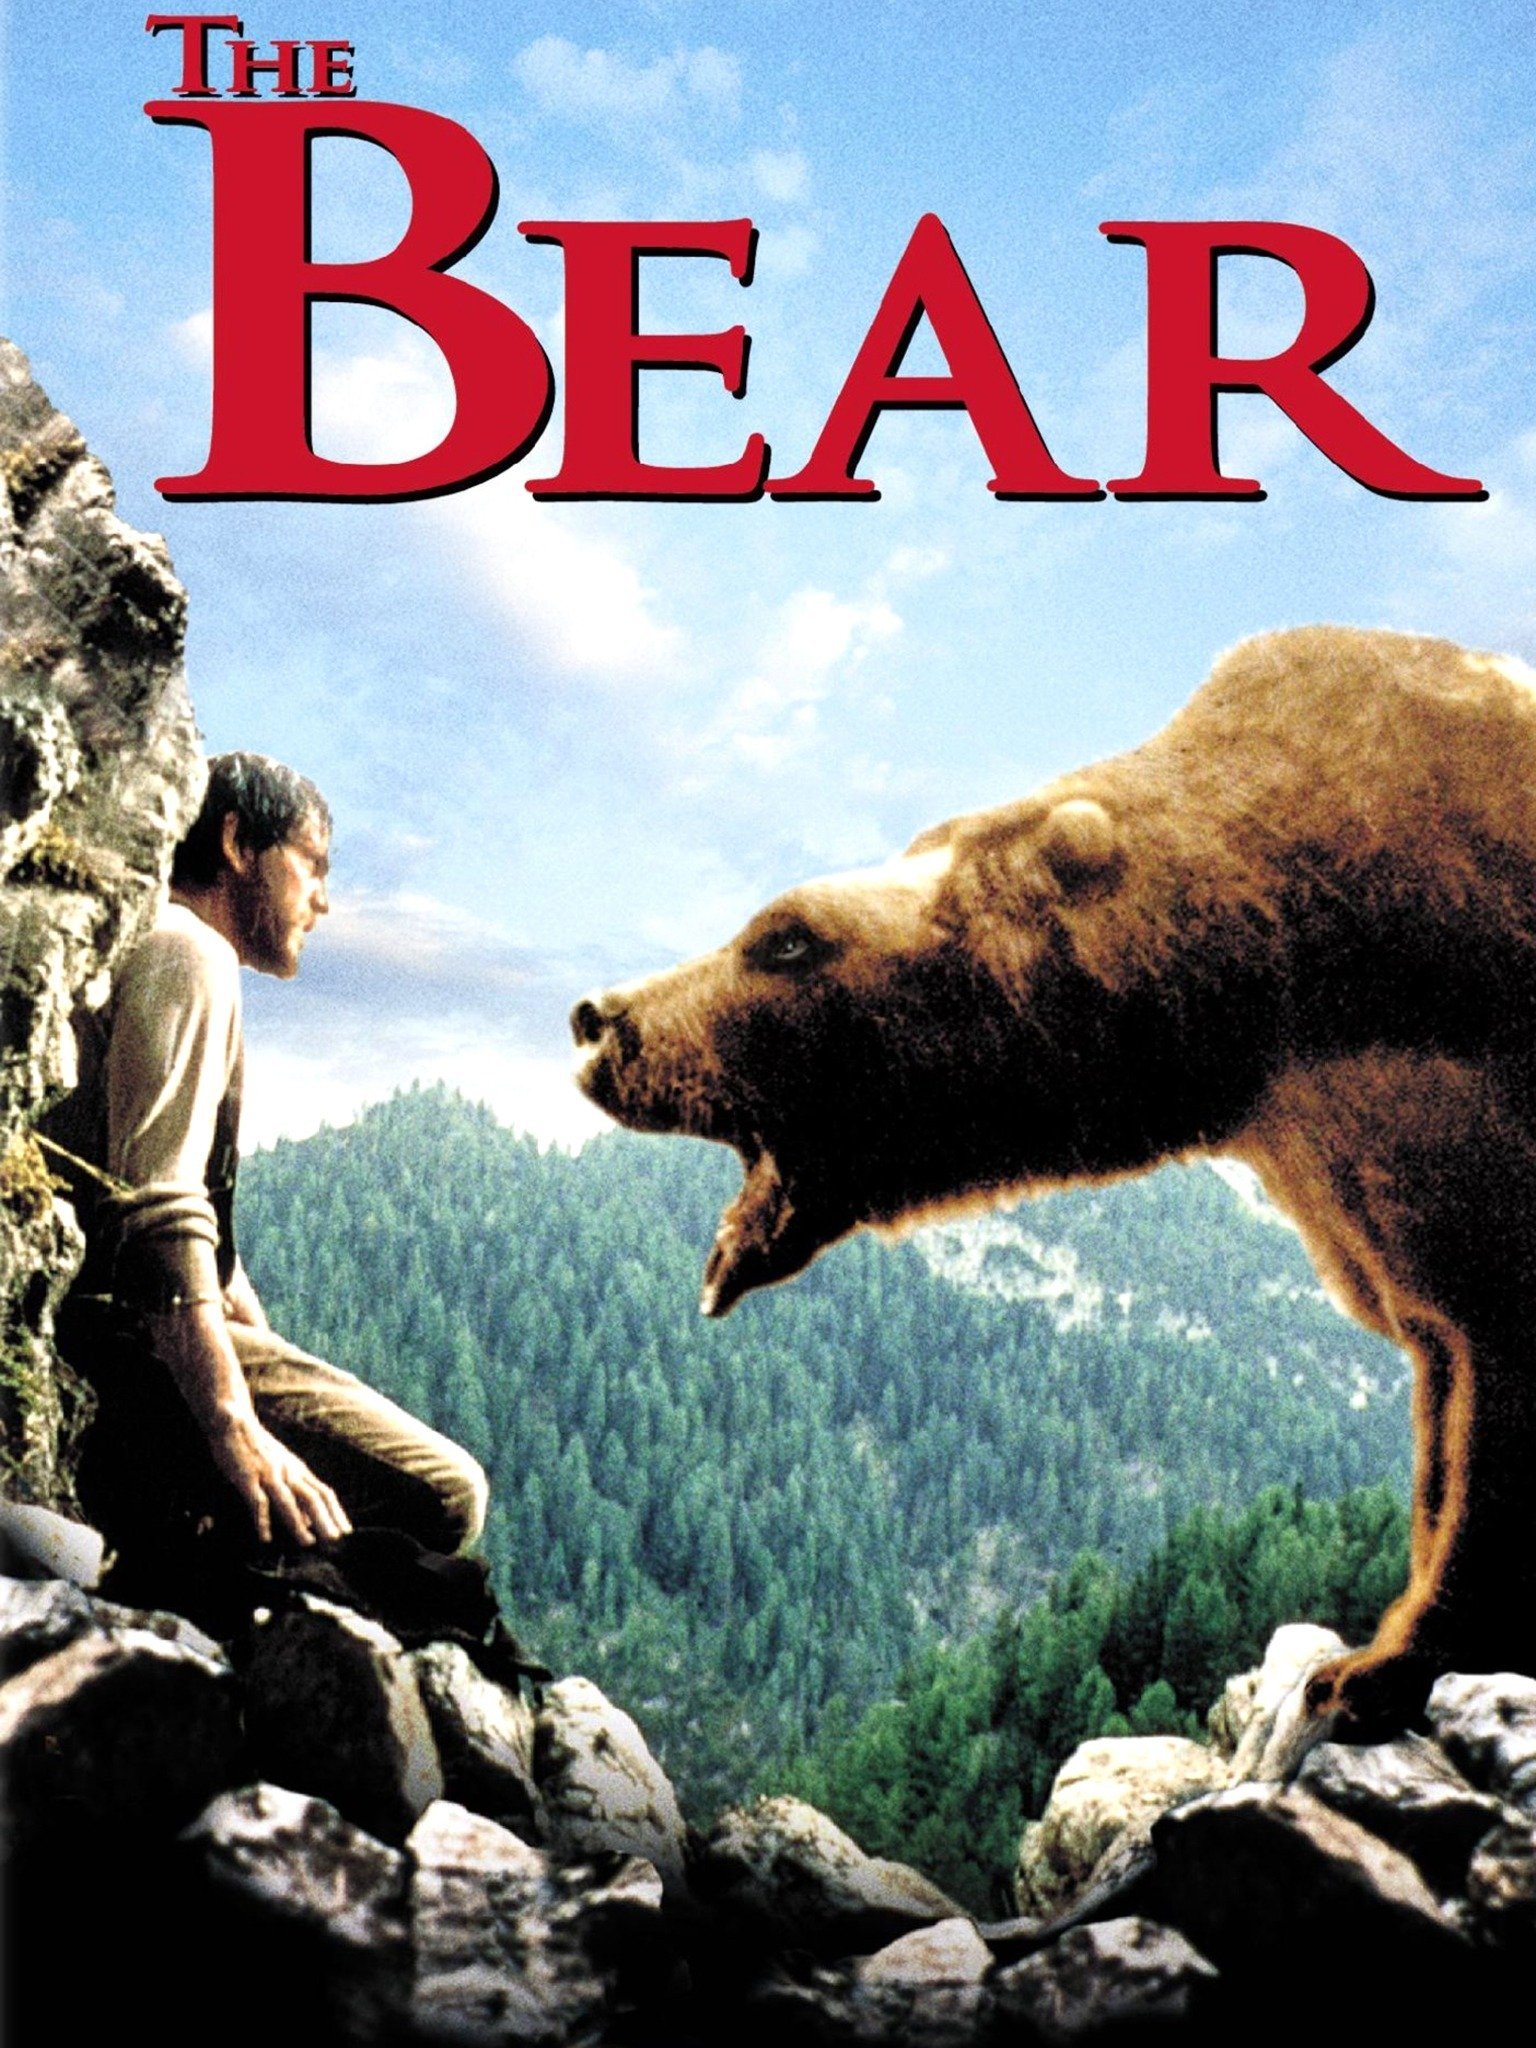 The Bear Movie Reviews